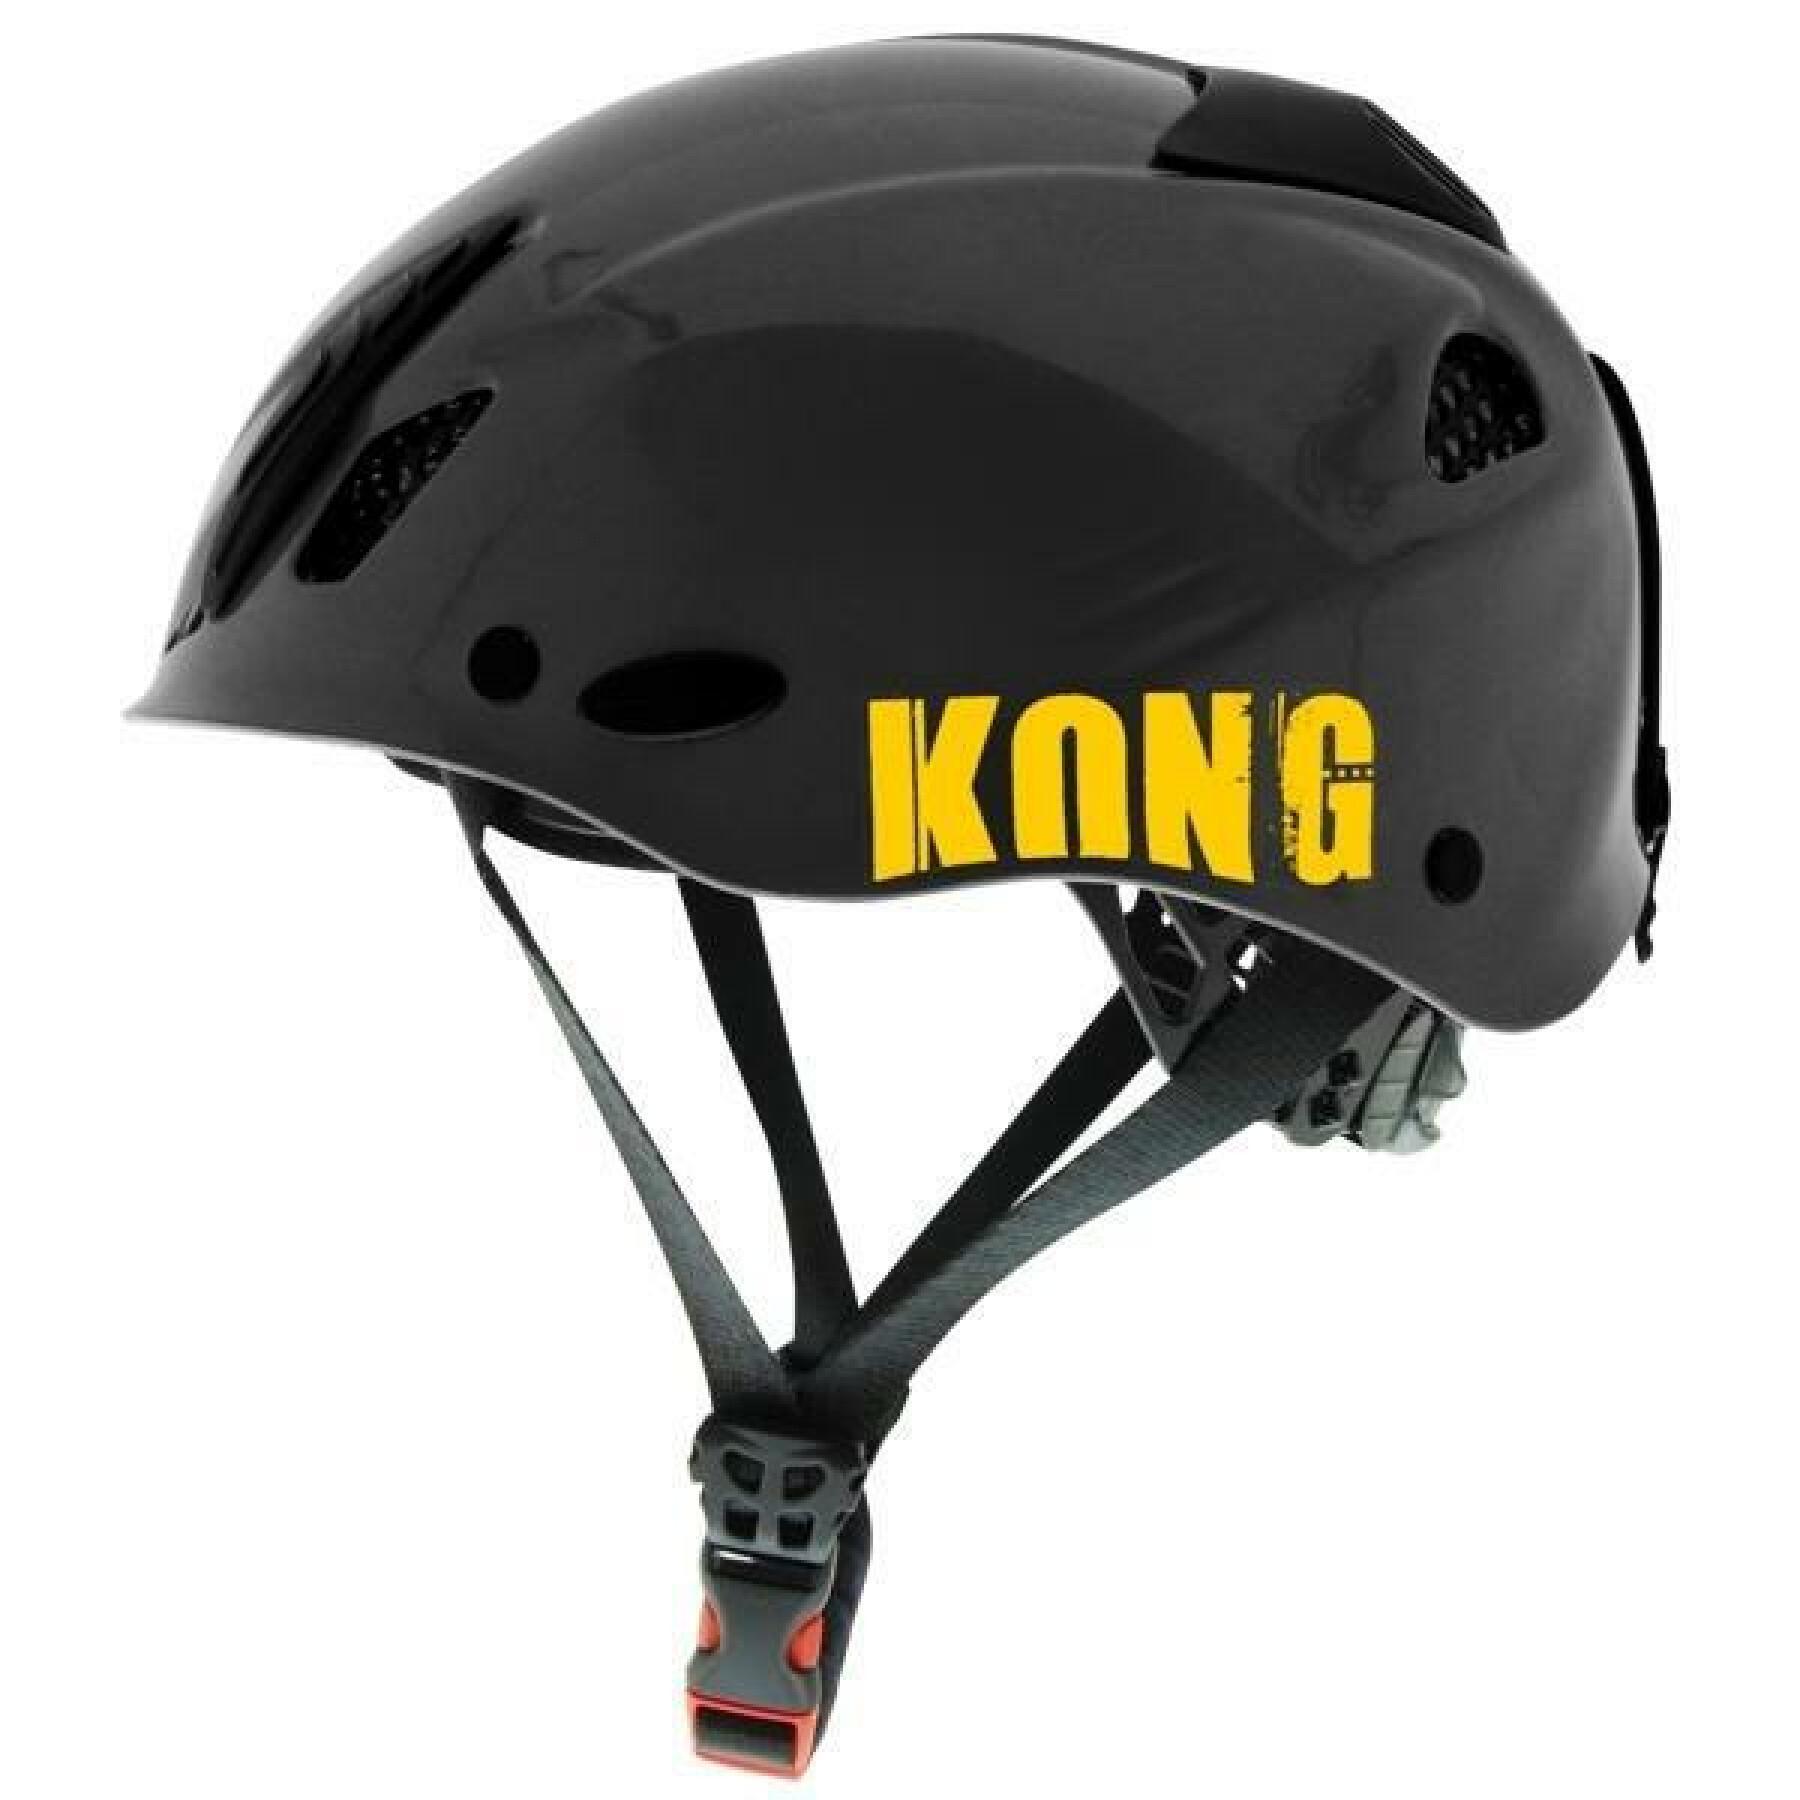 Kong Mouse Climbing Helmet Black 